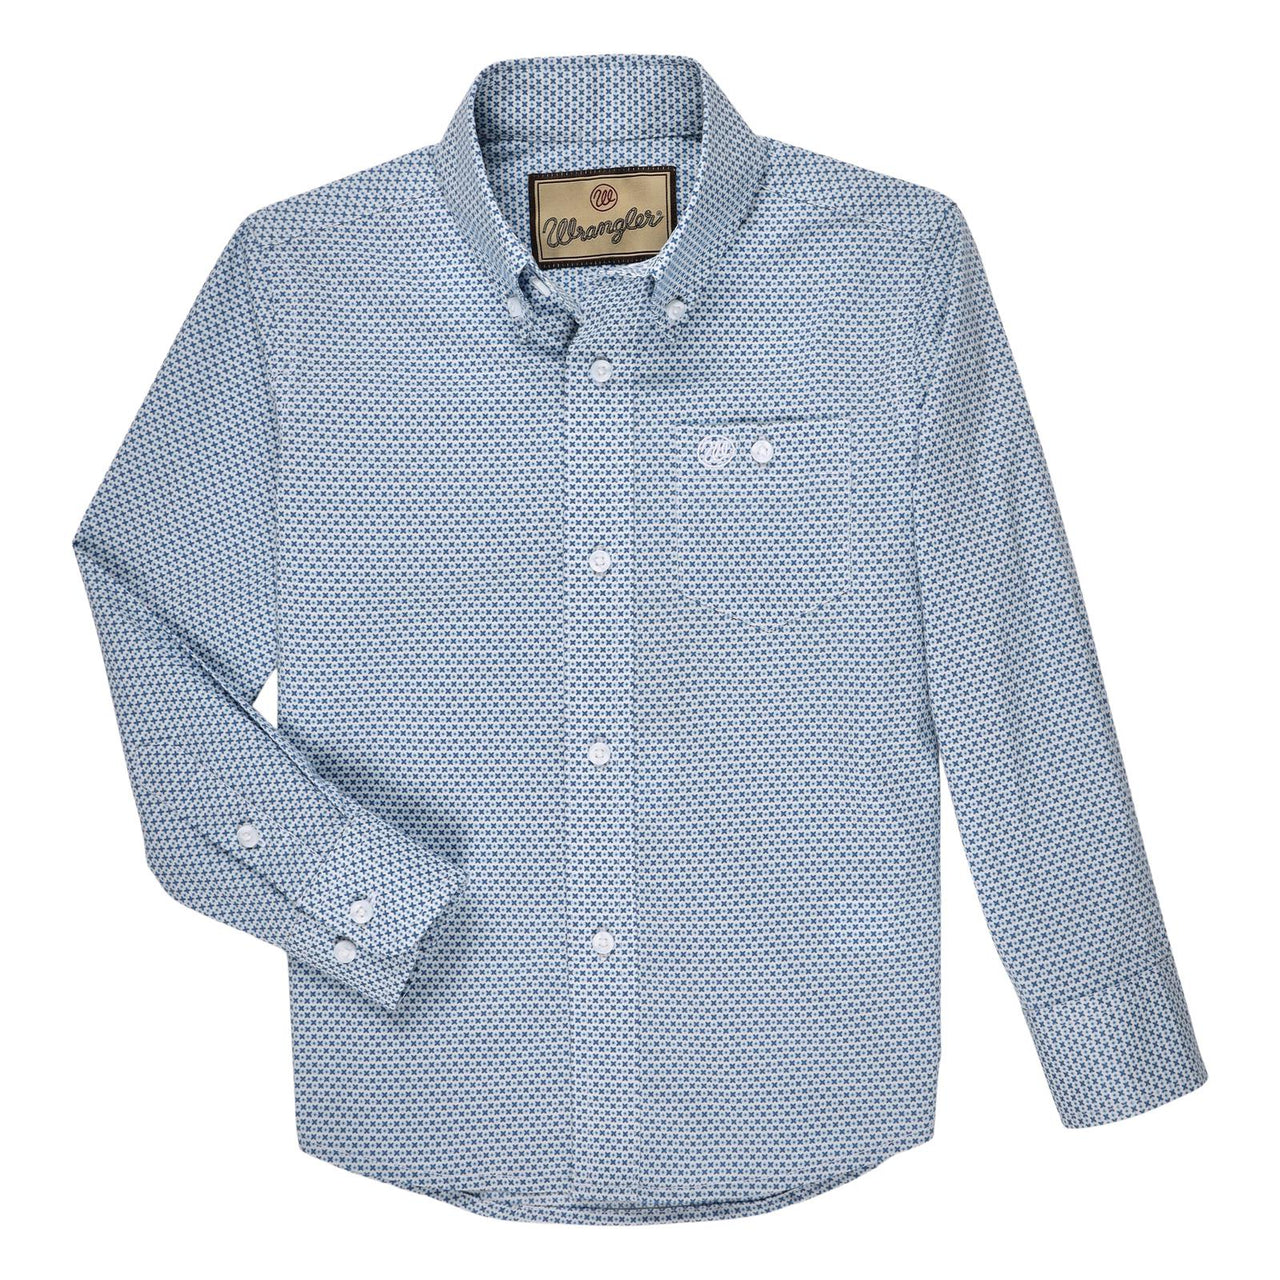 Wrangler Boys Classic Long Sleeve Shirt - Blue